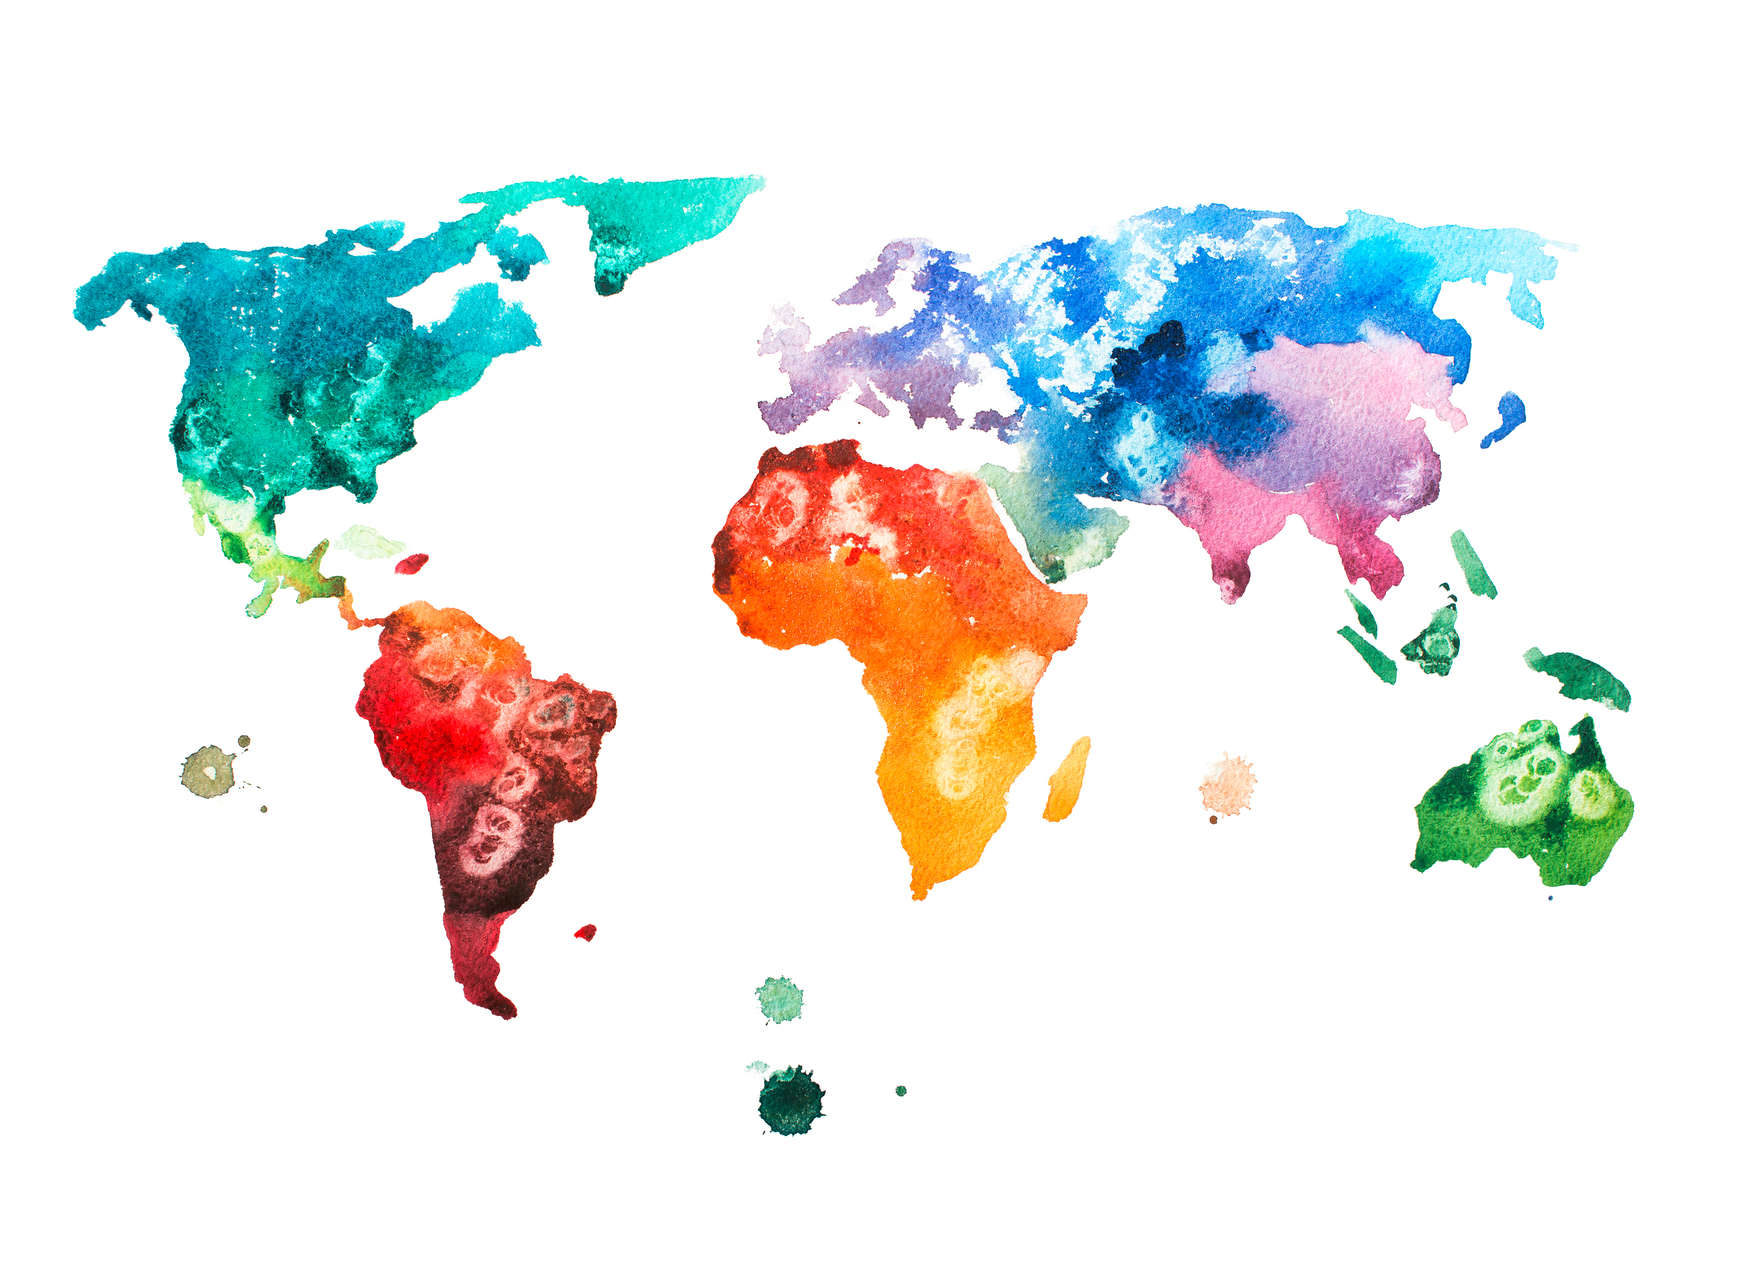             Papel Pintado Mapa del Mundo Acuarela - Colorido, Blanco
        